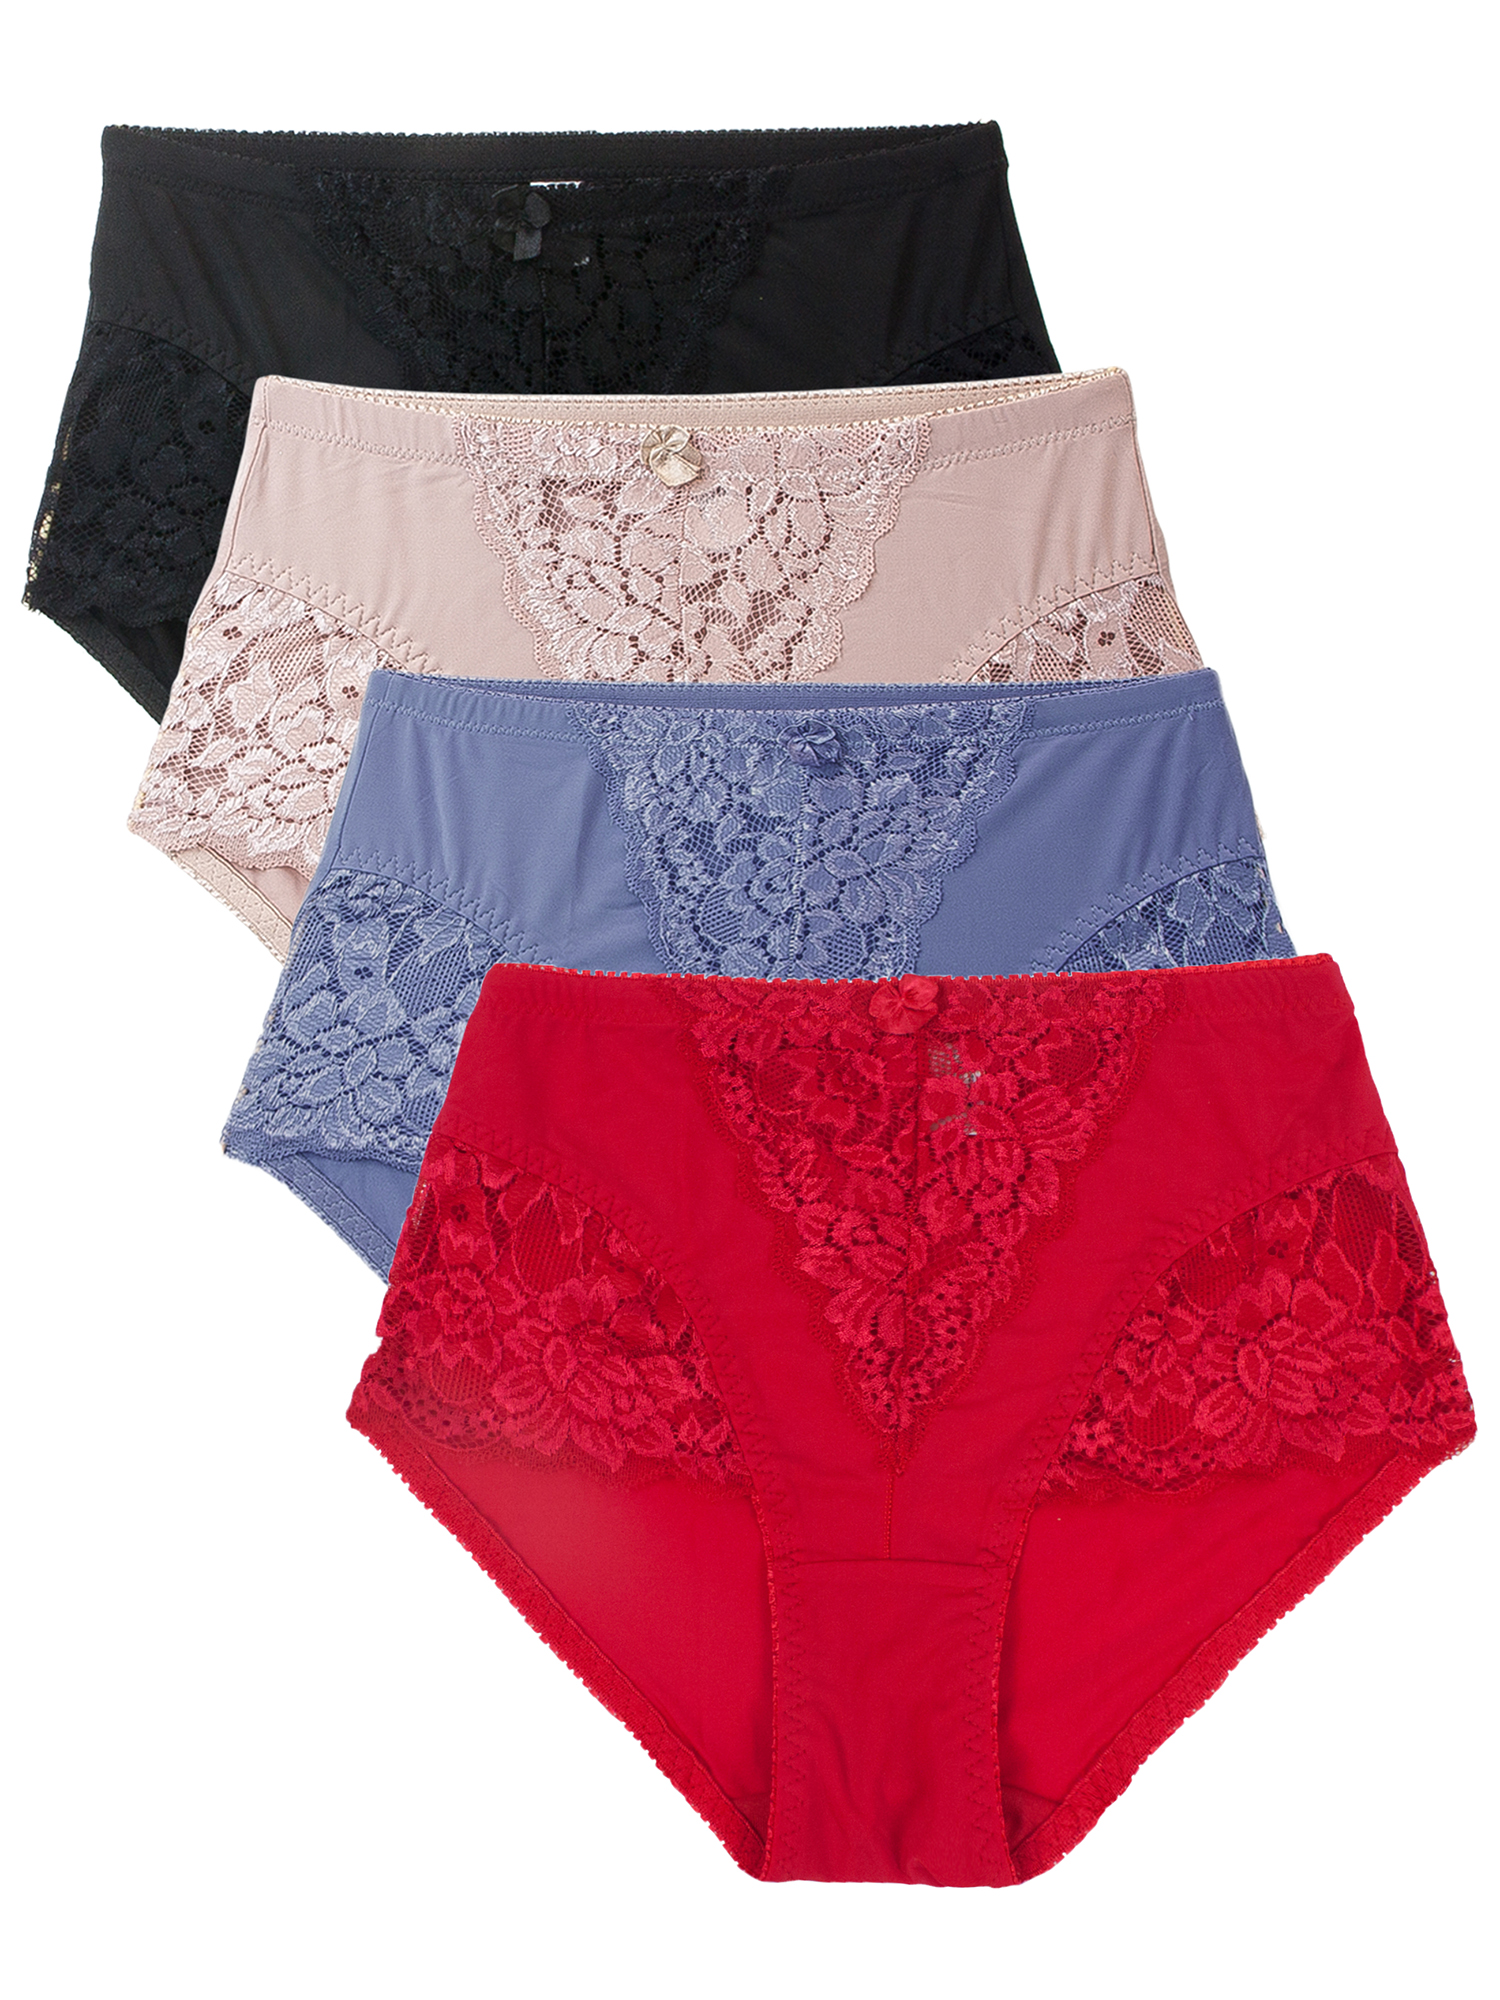 Womens Underwear Microfiber Silicone Edge Hipster Panties XS-3X Plus Size